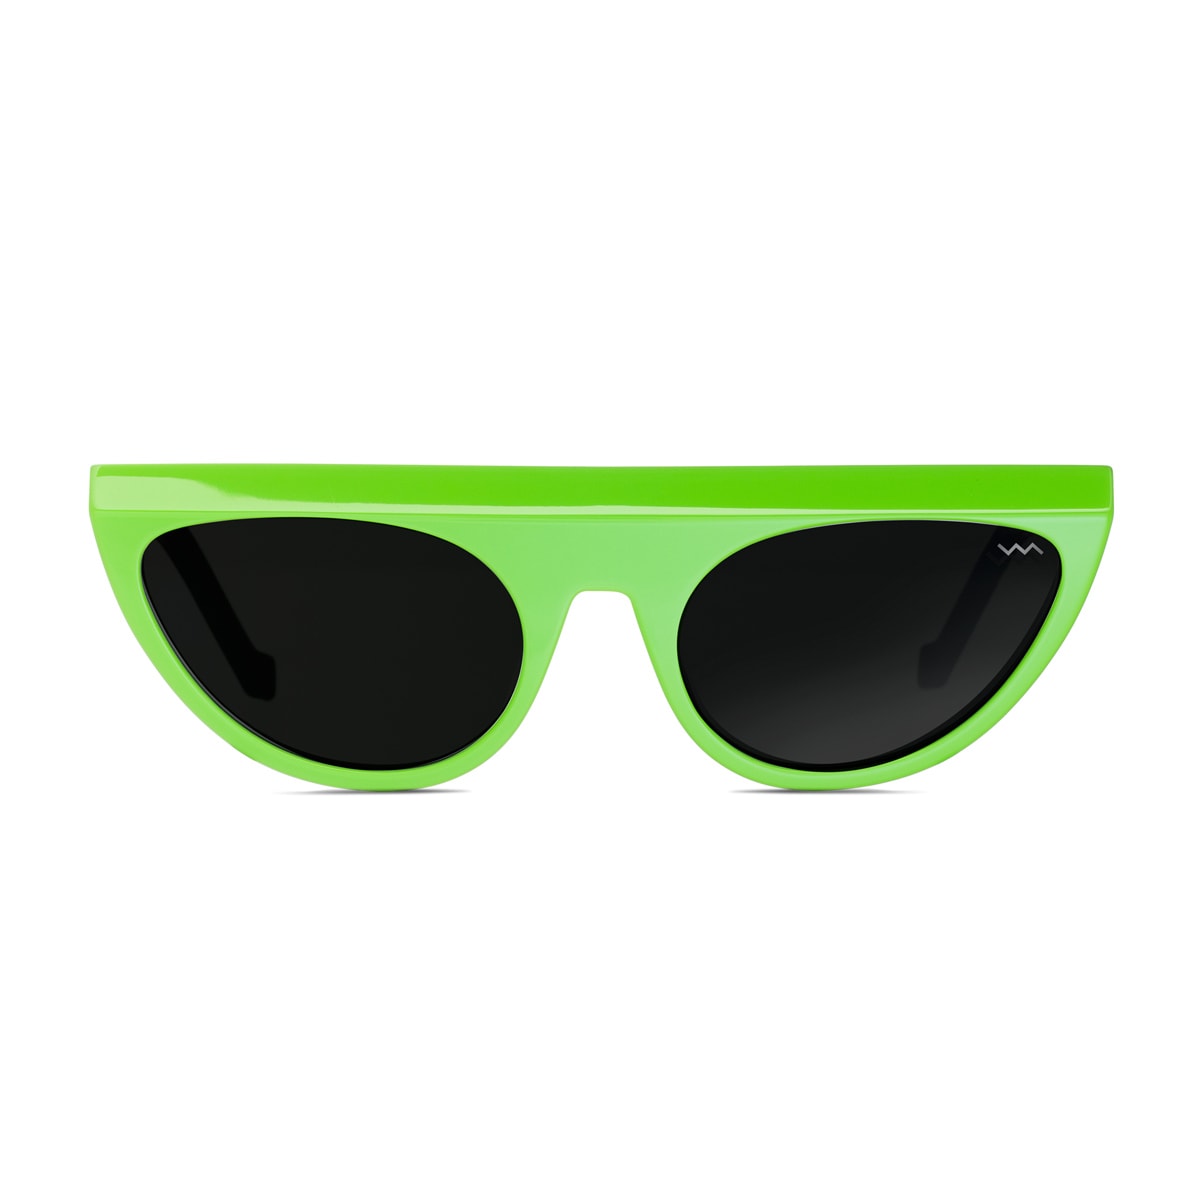 Bl0027 Black Label Acid Green Sunglasses